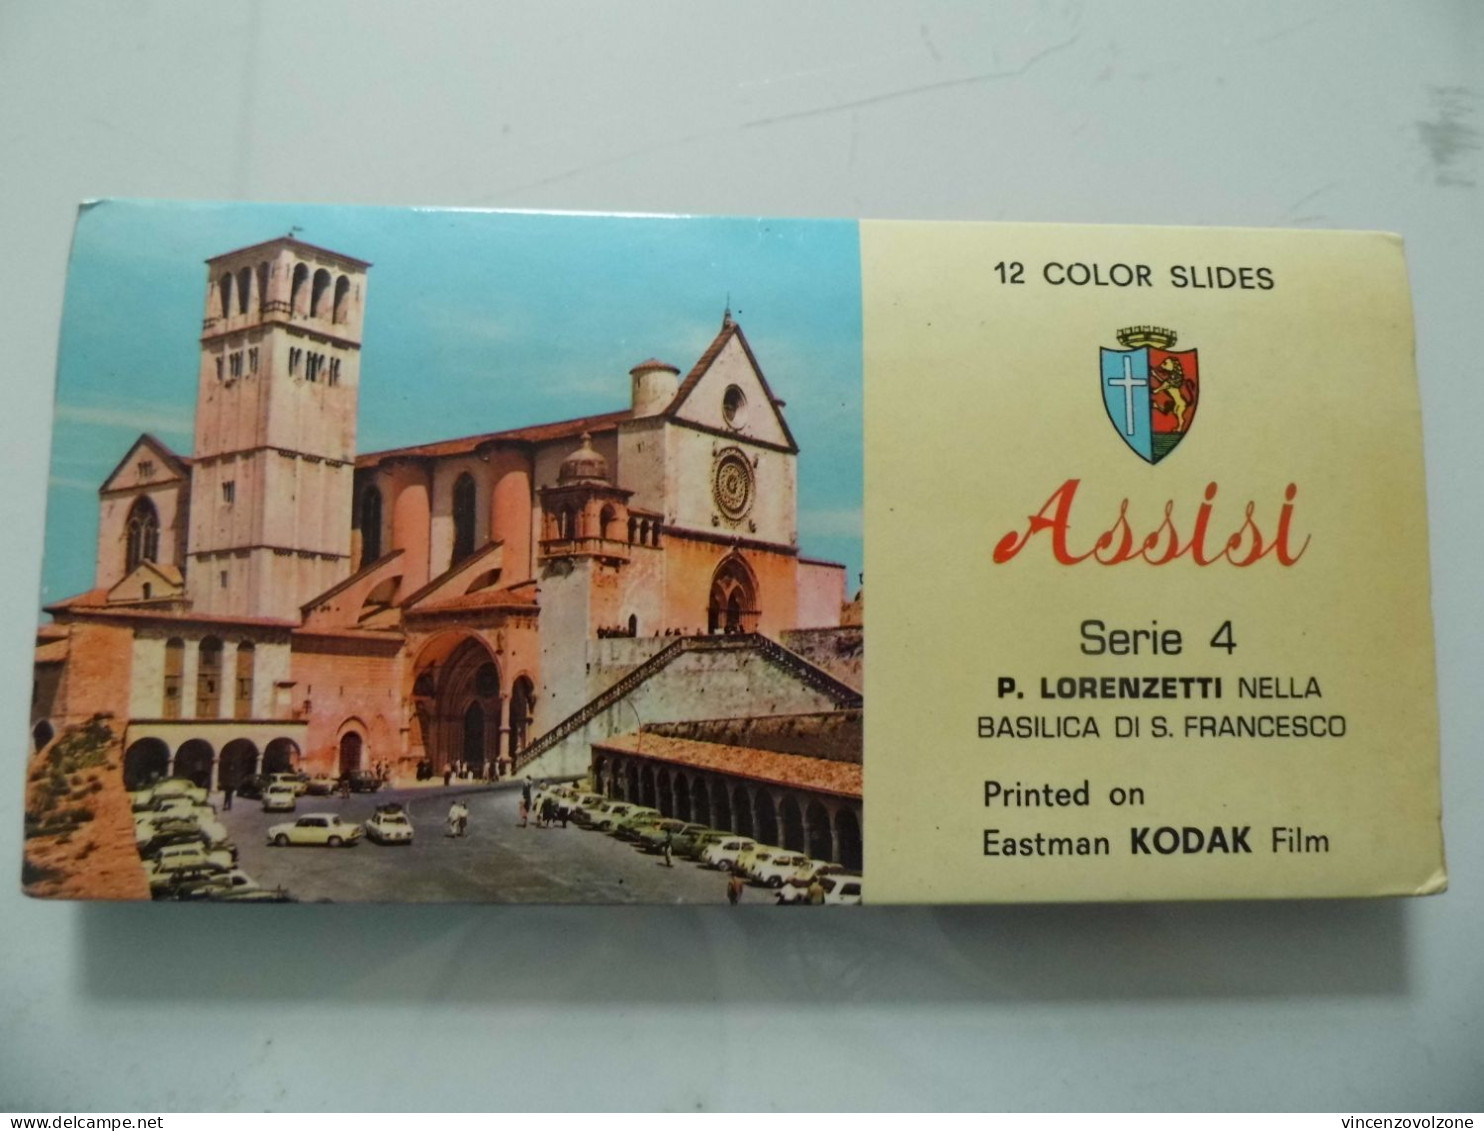 Souvenir "ASSISI 12 COLOR SLIDES Serie 4 P. LORENZETTI NELLA BASILICA DI S. FRANCESCO" Colorvald - Valdagno 1965 - Diapositives